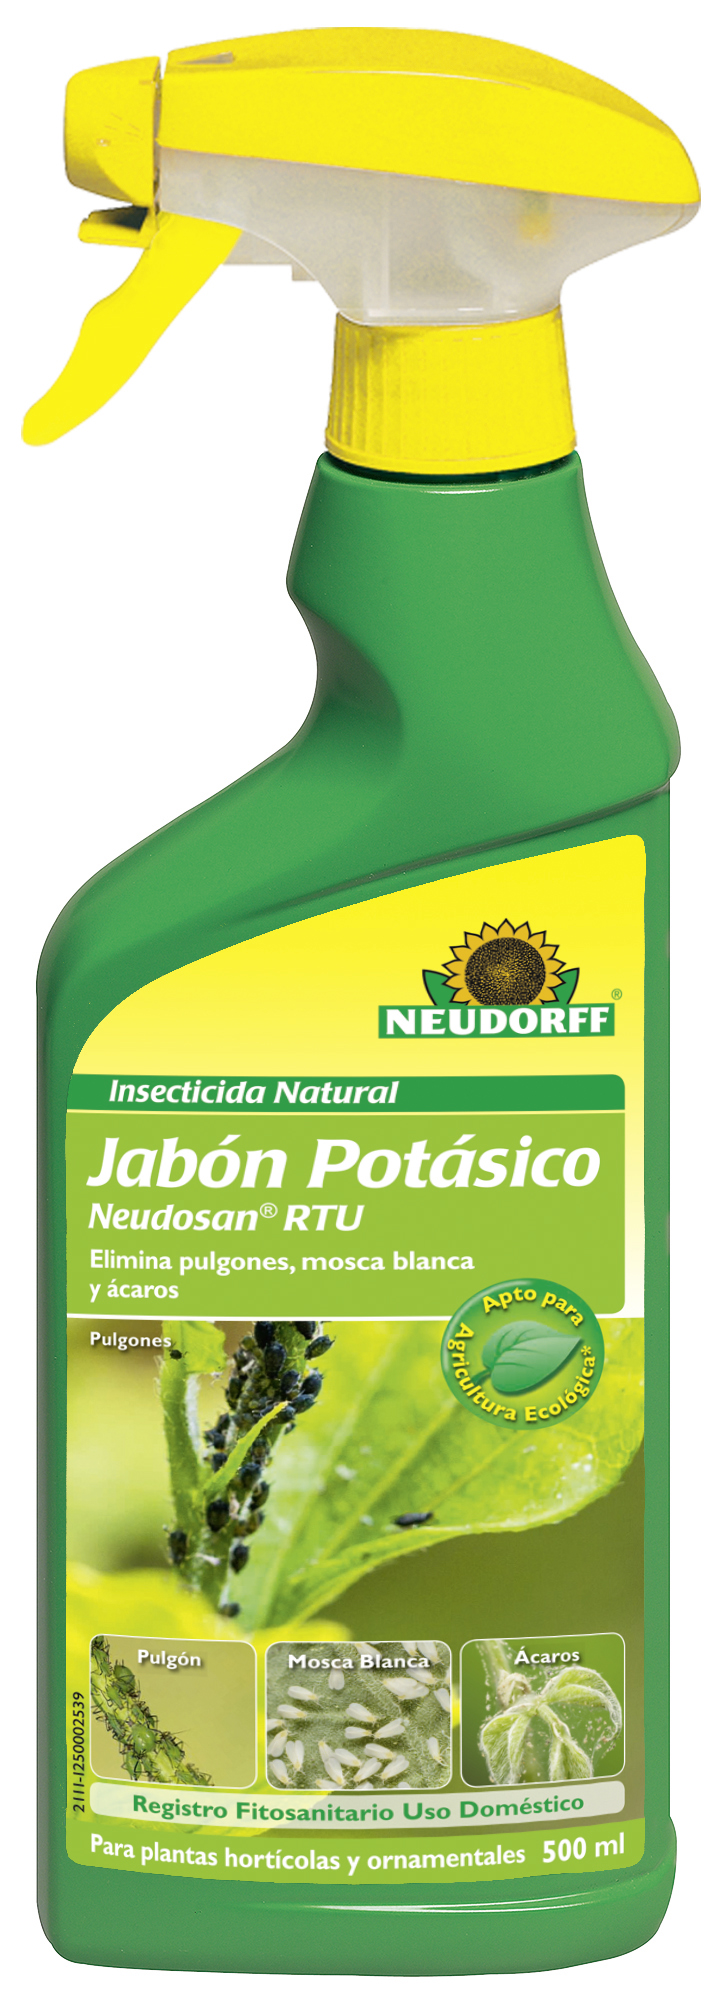 responsabilidad Relativamente Madison Neudorff : Insecticida Natural Jabón Potásico Neudosan RTU